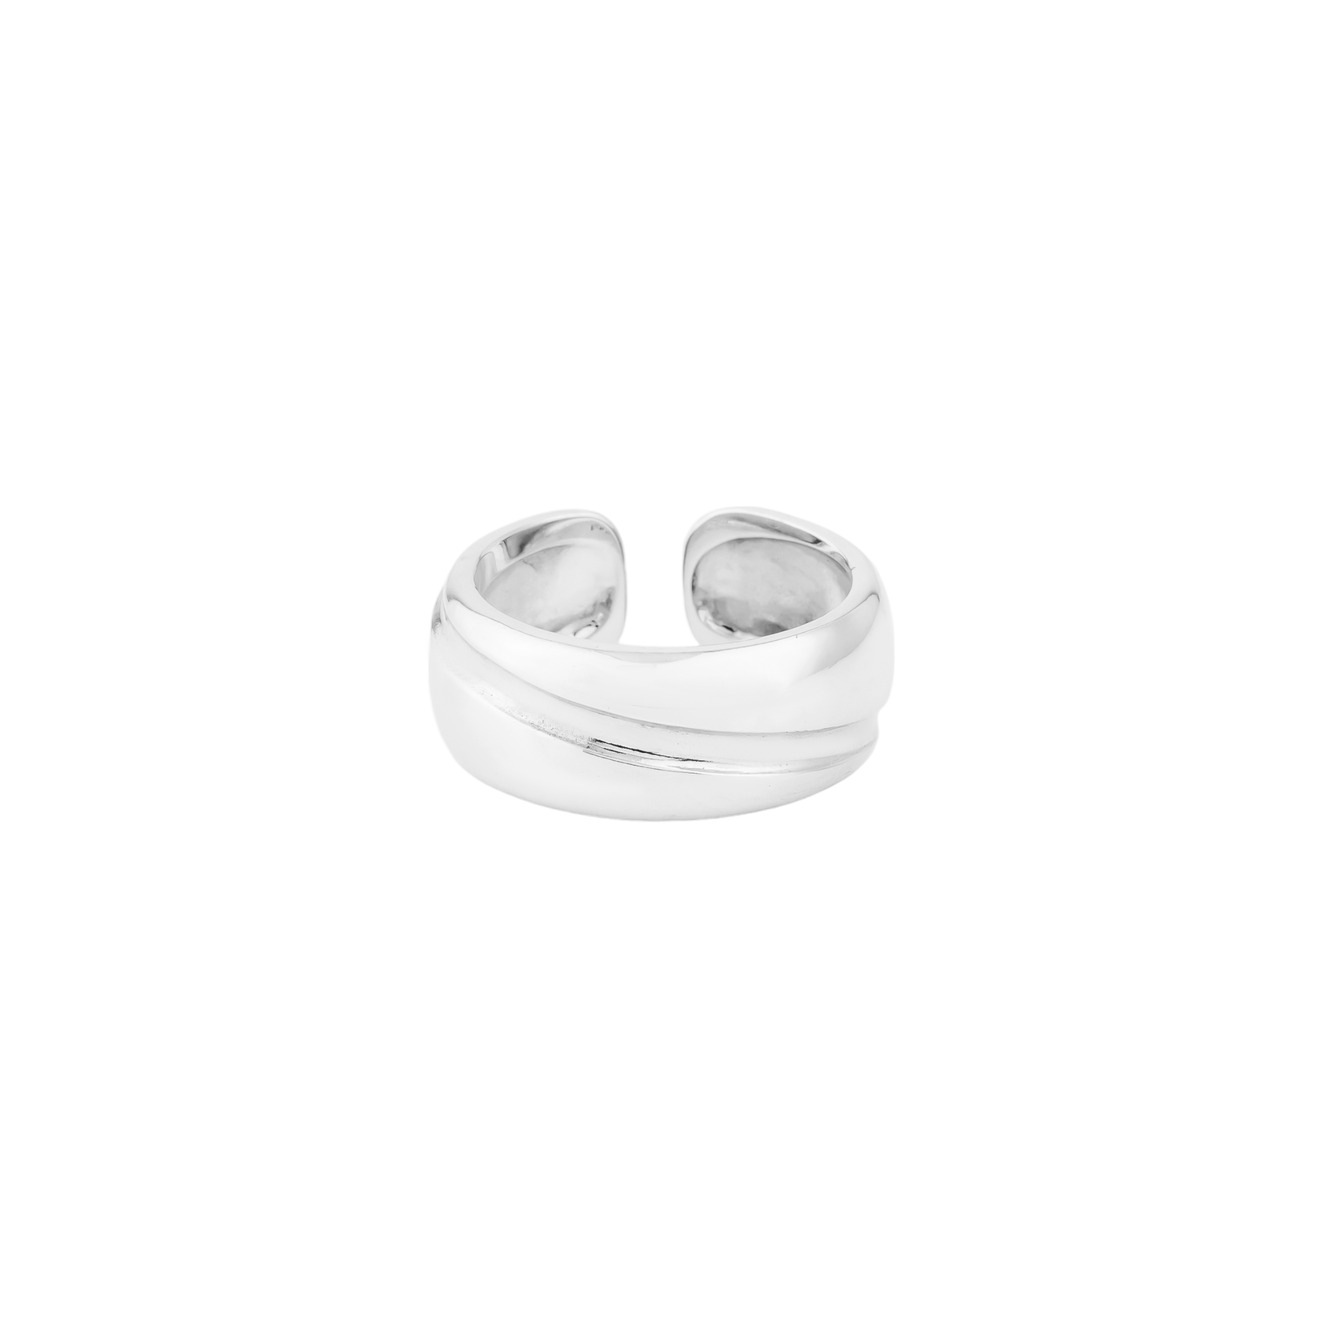 philippe audibert кольцо maloe с серебряным покрытием Philippe Audibert Кольцо Olof с серебряным покрытием